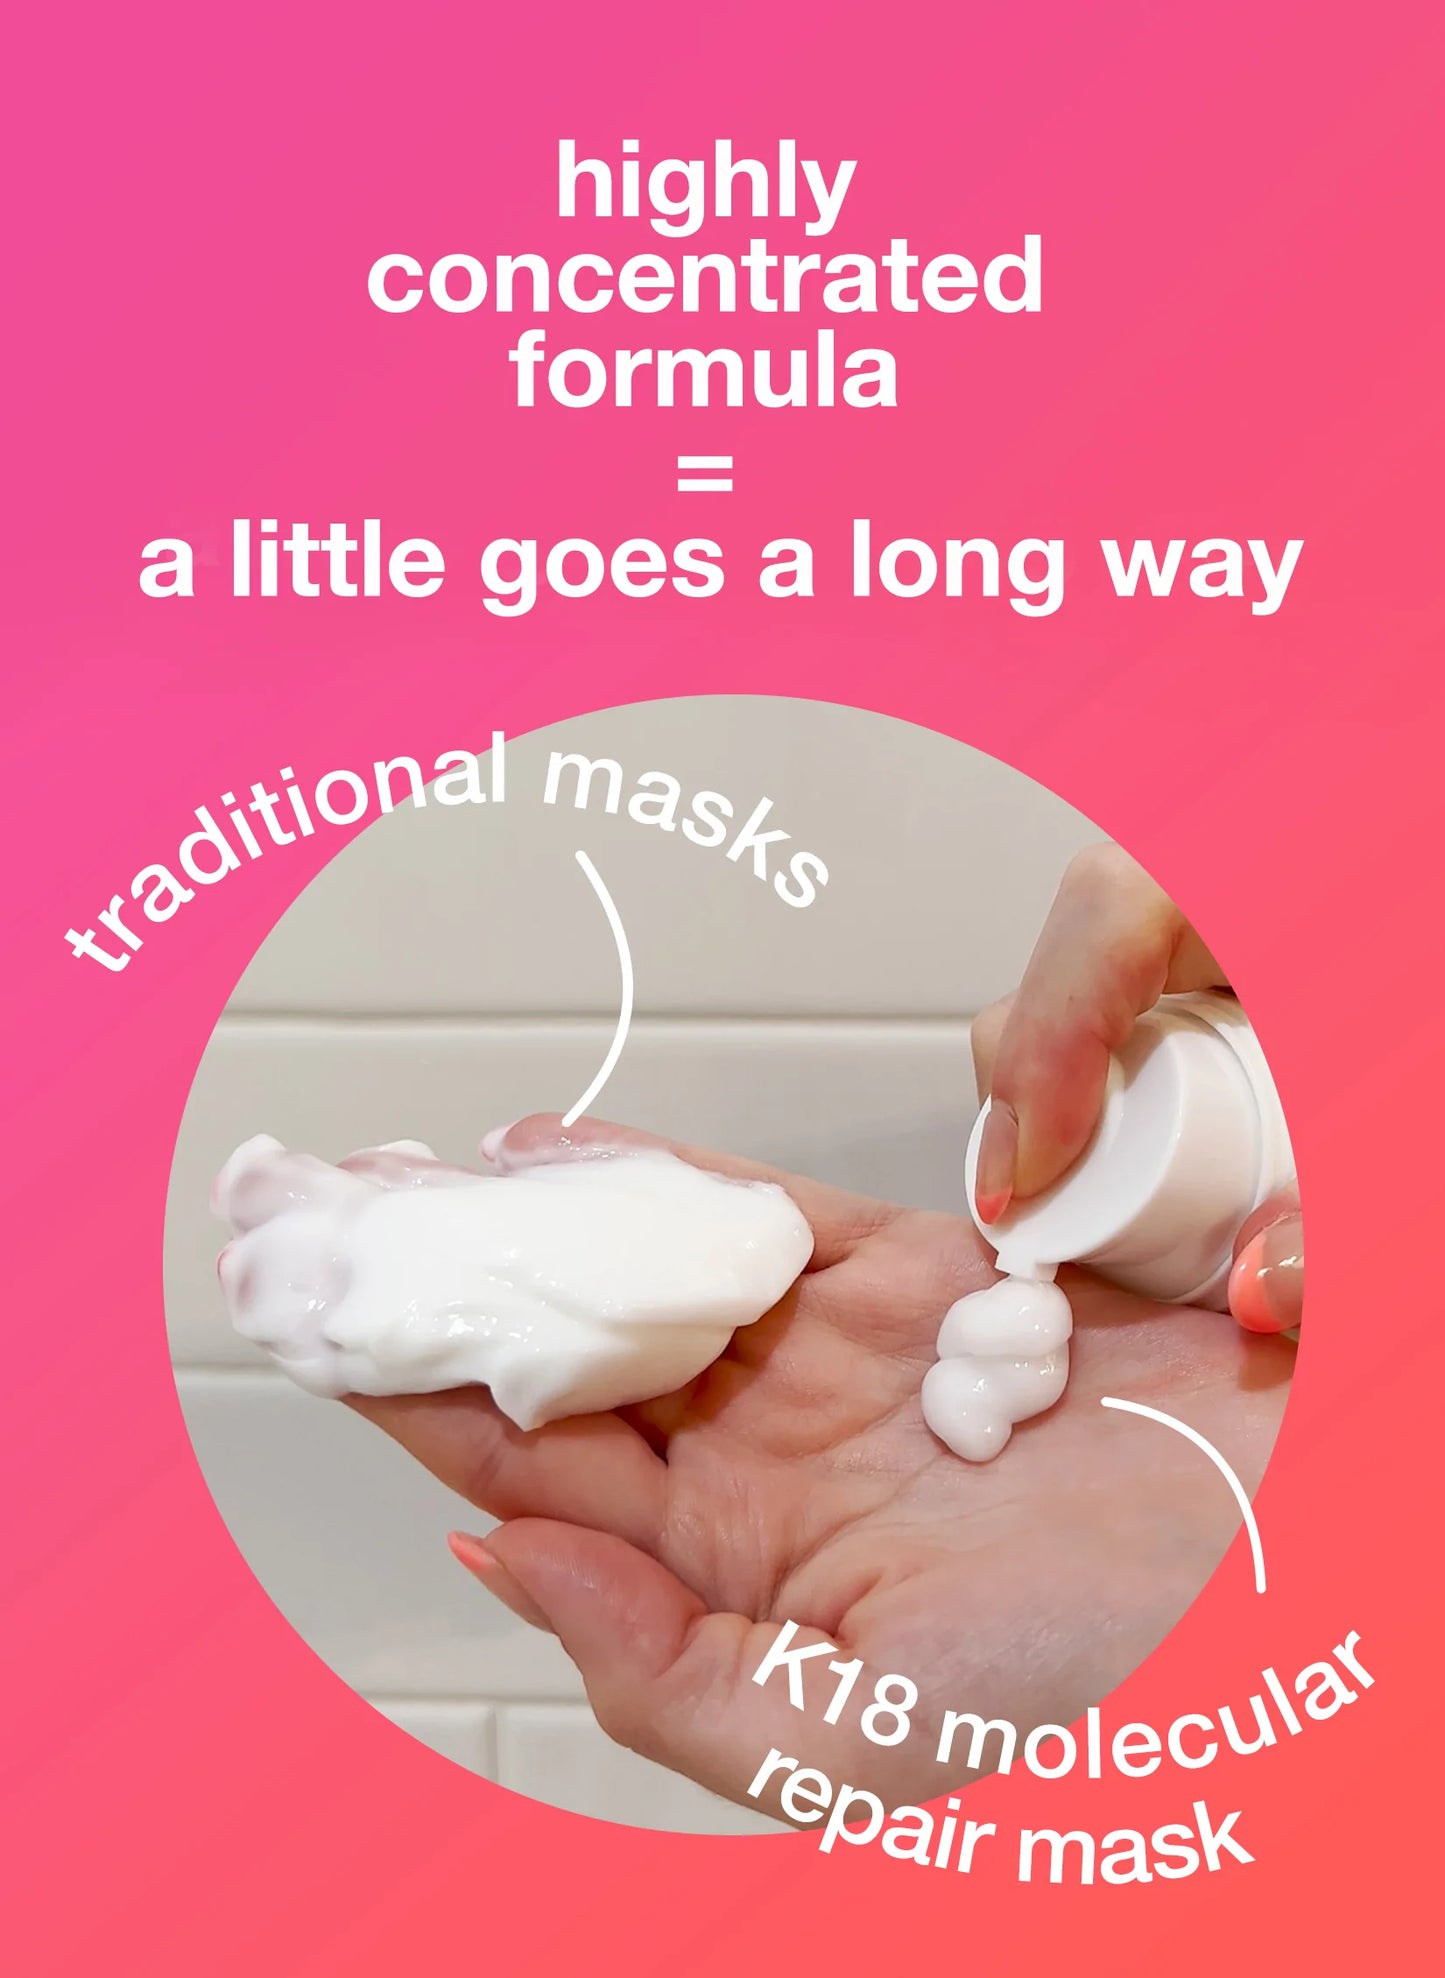 K18 Repair Mask Concentration